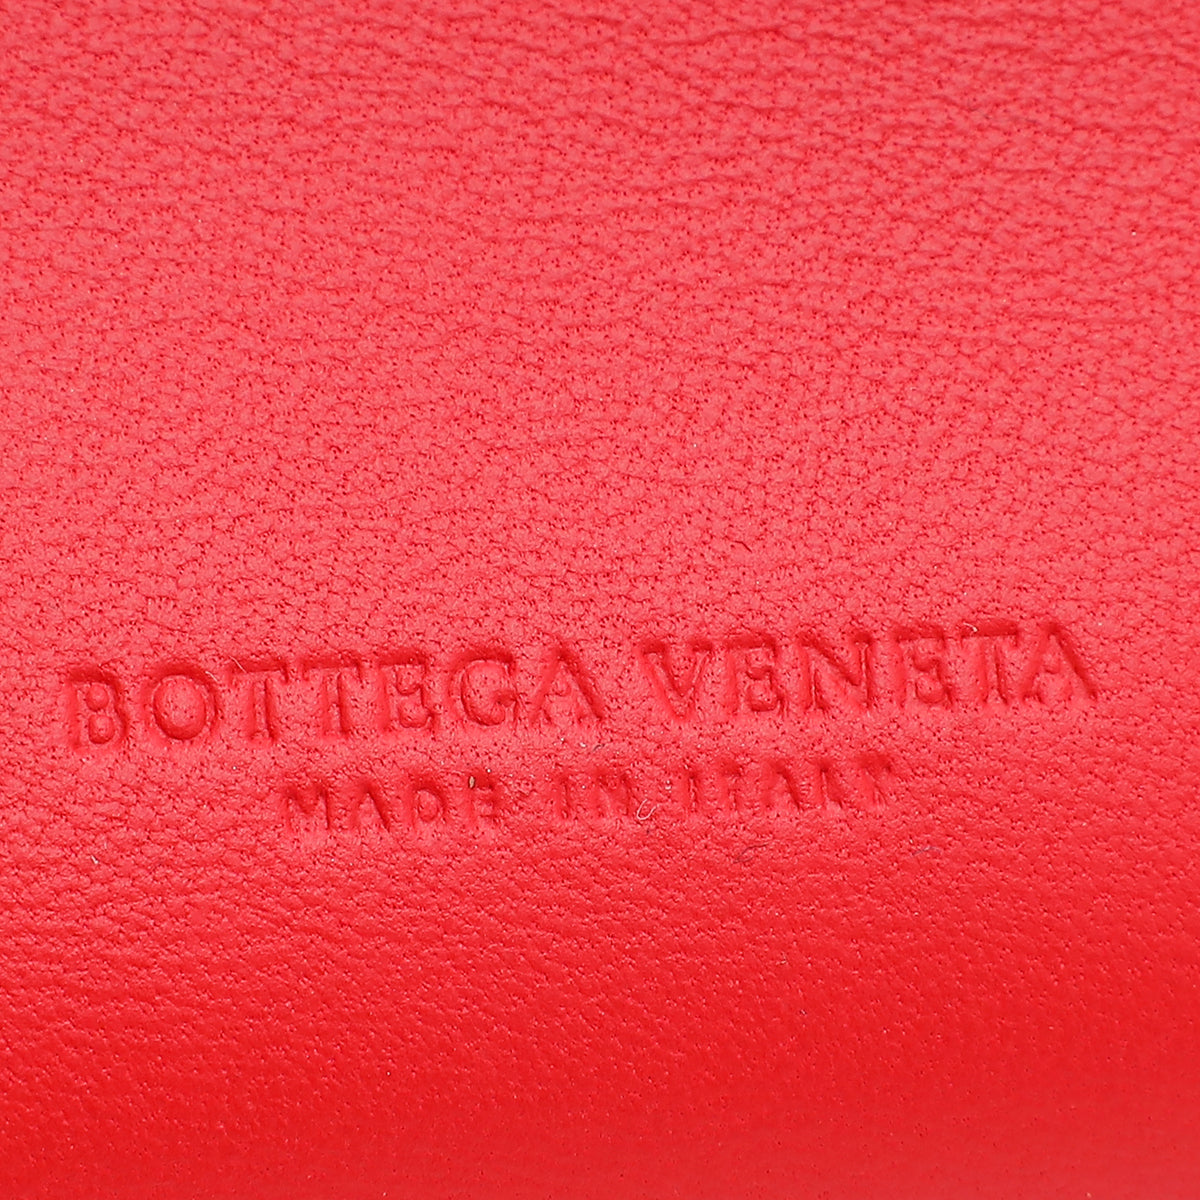 Bottega Veneta Bi Color Passport Case